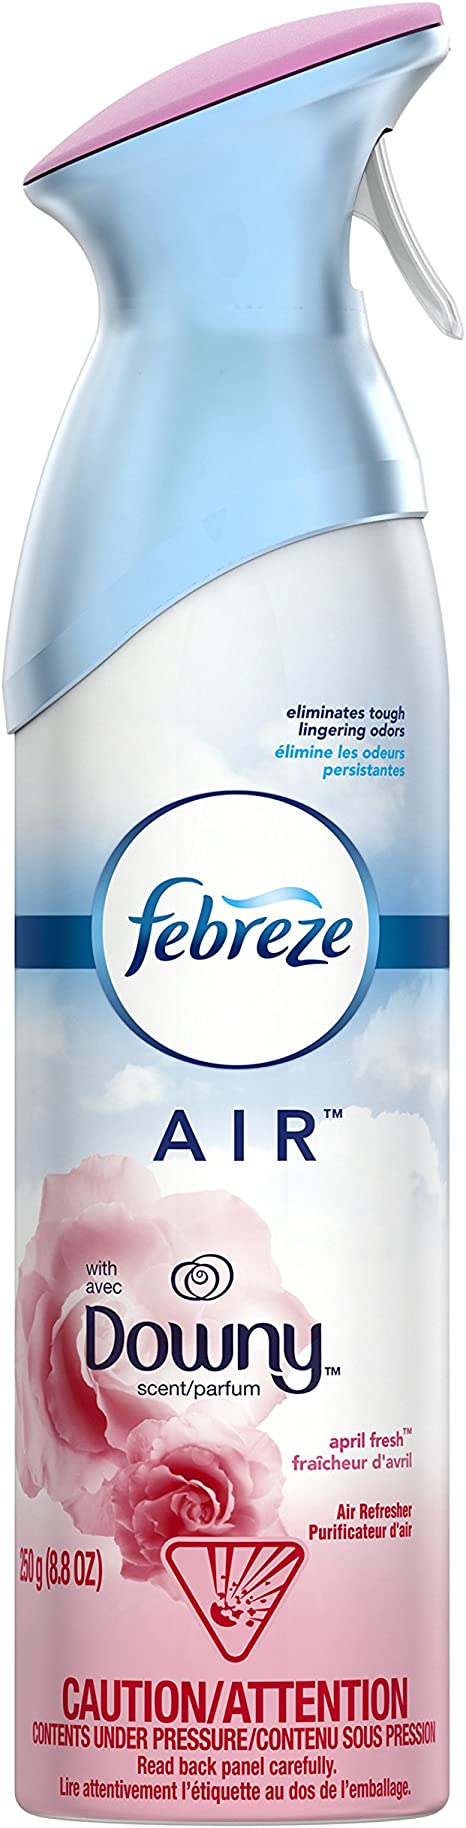 Febreze AIR Freshener Spray with Dawn Scent, Odor Eliminator, April Fresh (1 Count, 250 g)